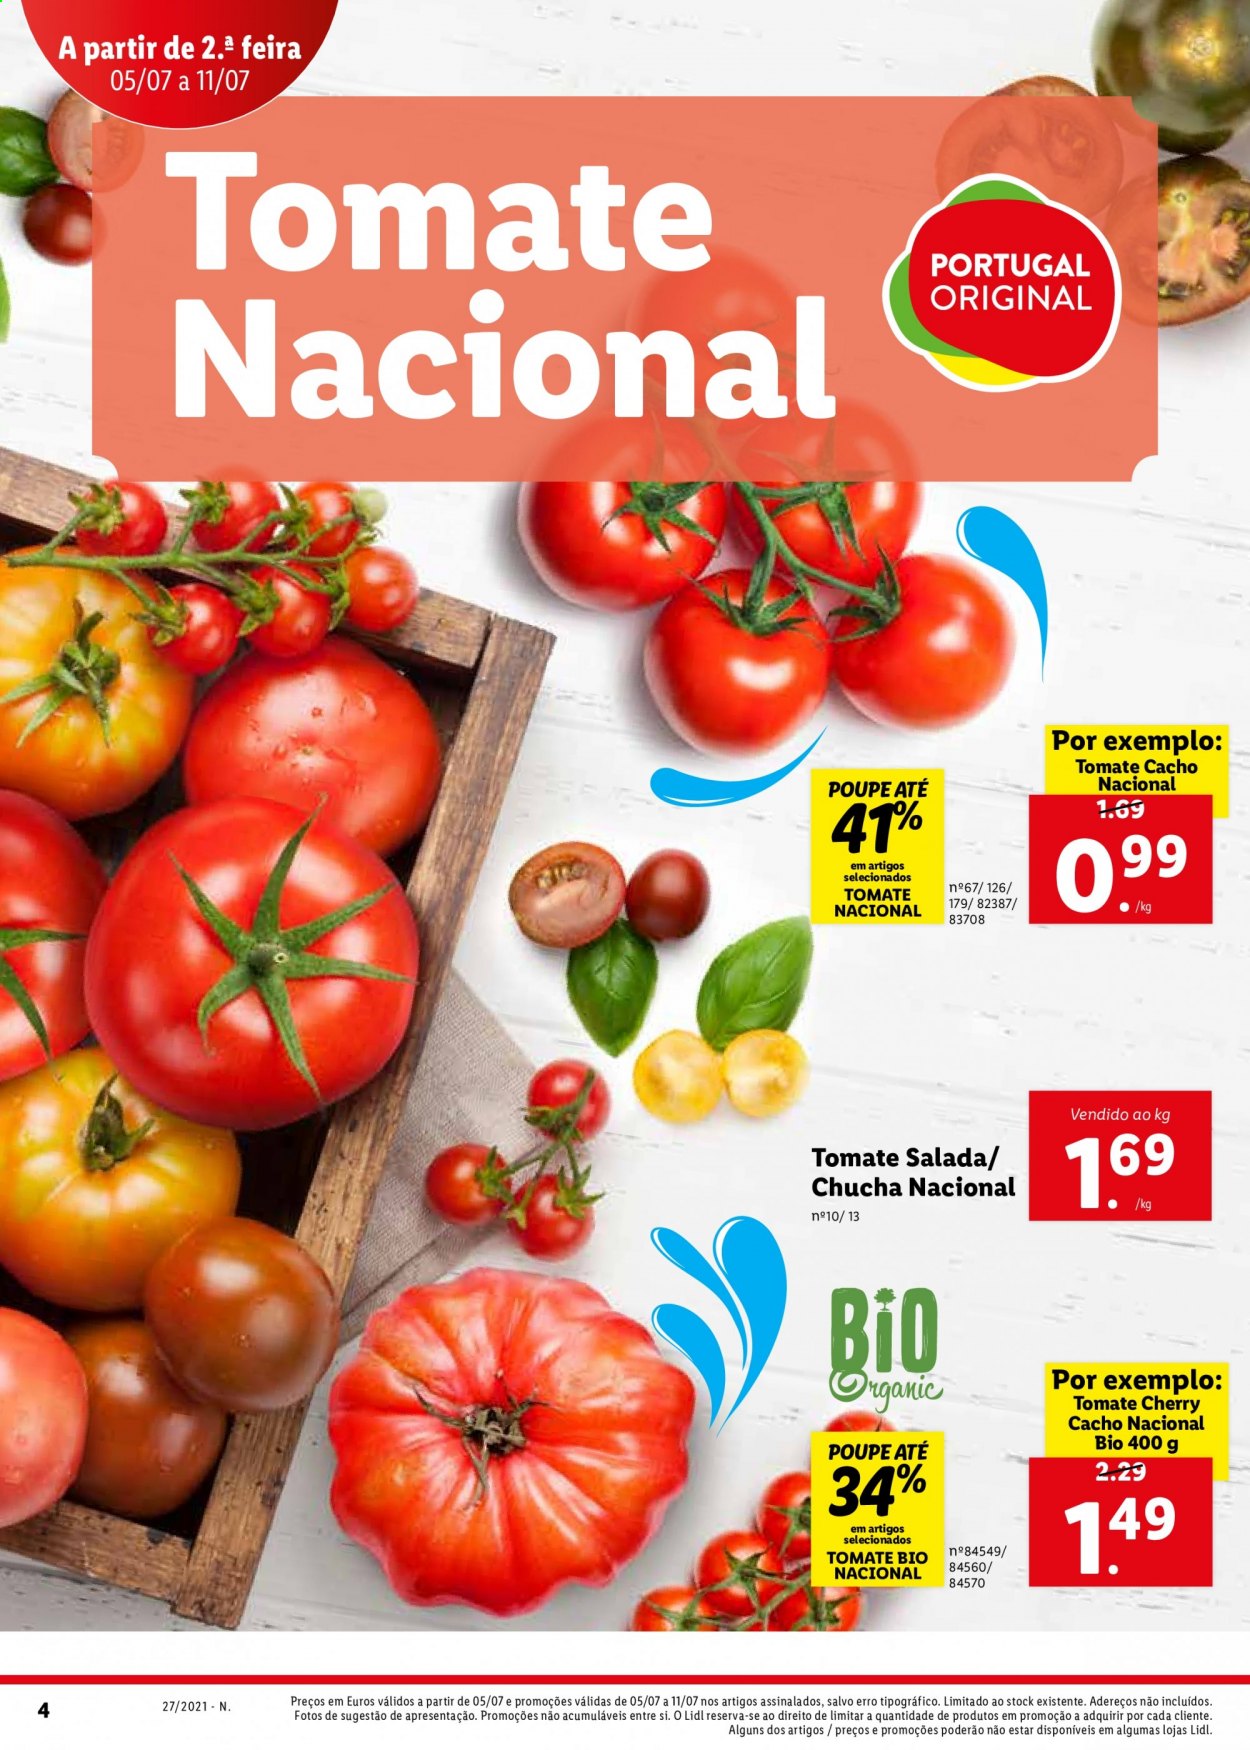 thumbnail - Folheto Lidl - 5.7.2021 - 11.7.2021 - Produtos em promoção - tomate, minitomate, tomate cherry. Página 4.